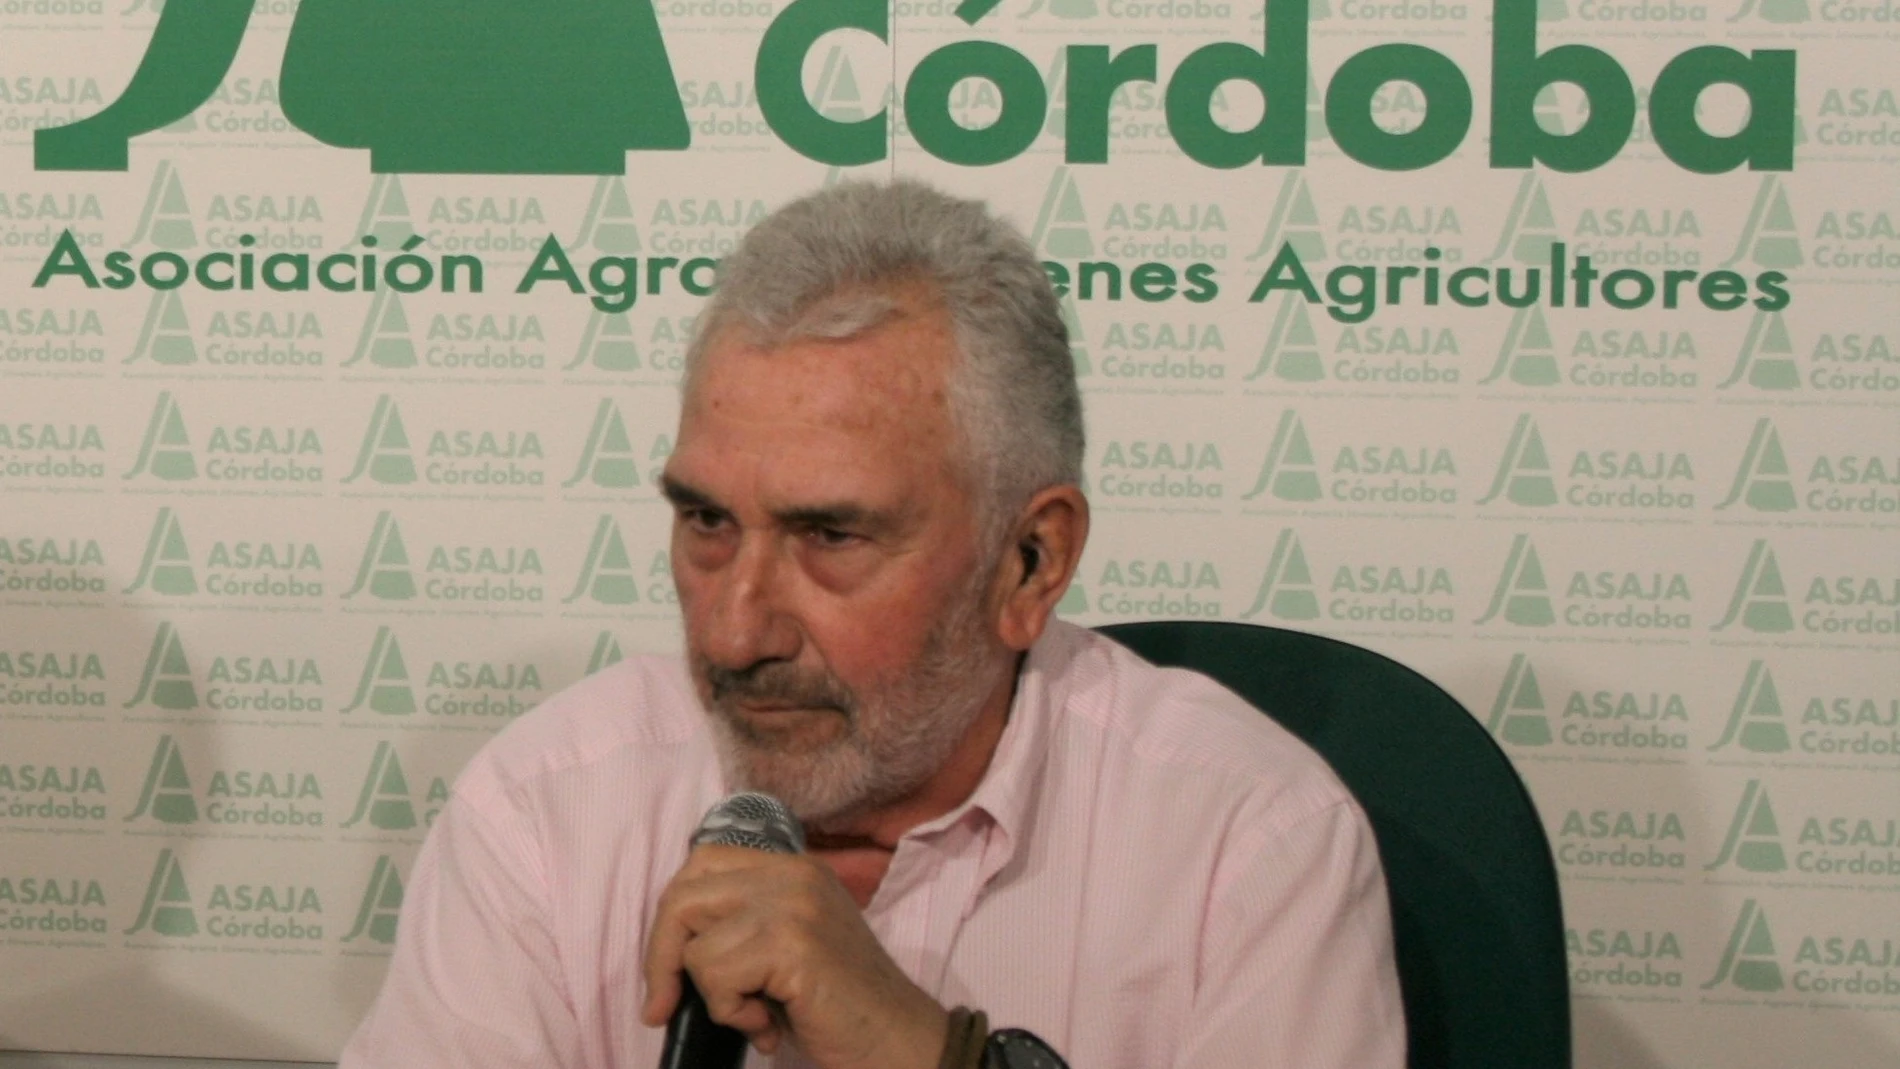 El presidente de Asaja Córdoba, Ignacio Fernández de Mesa